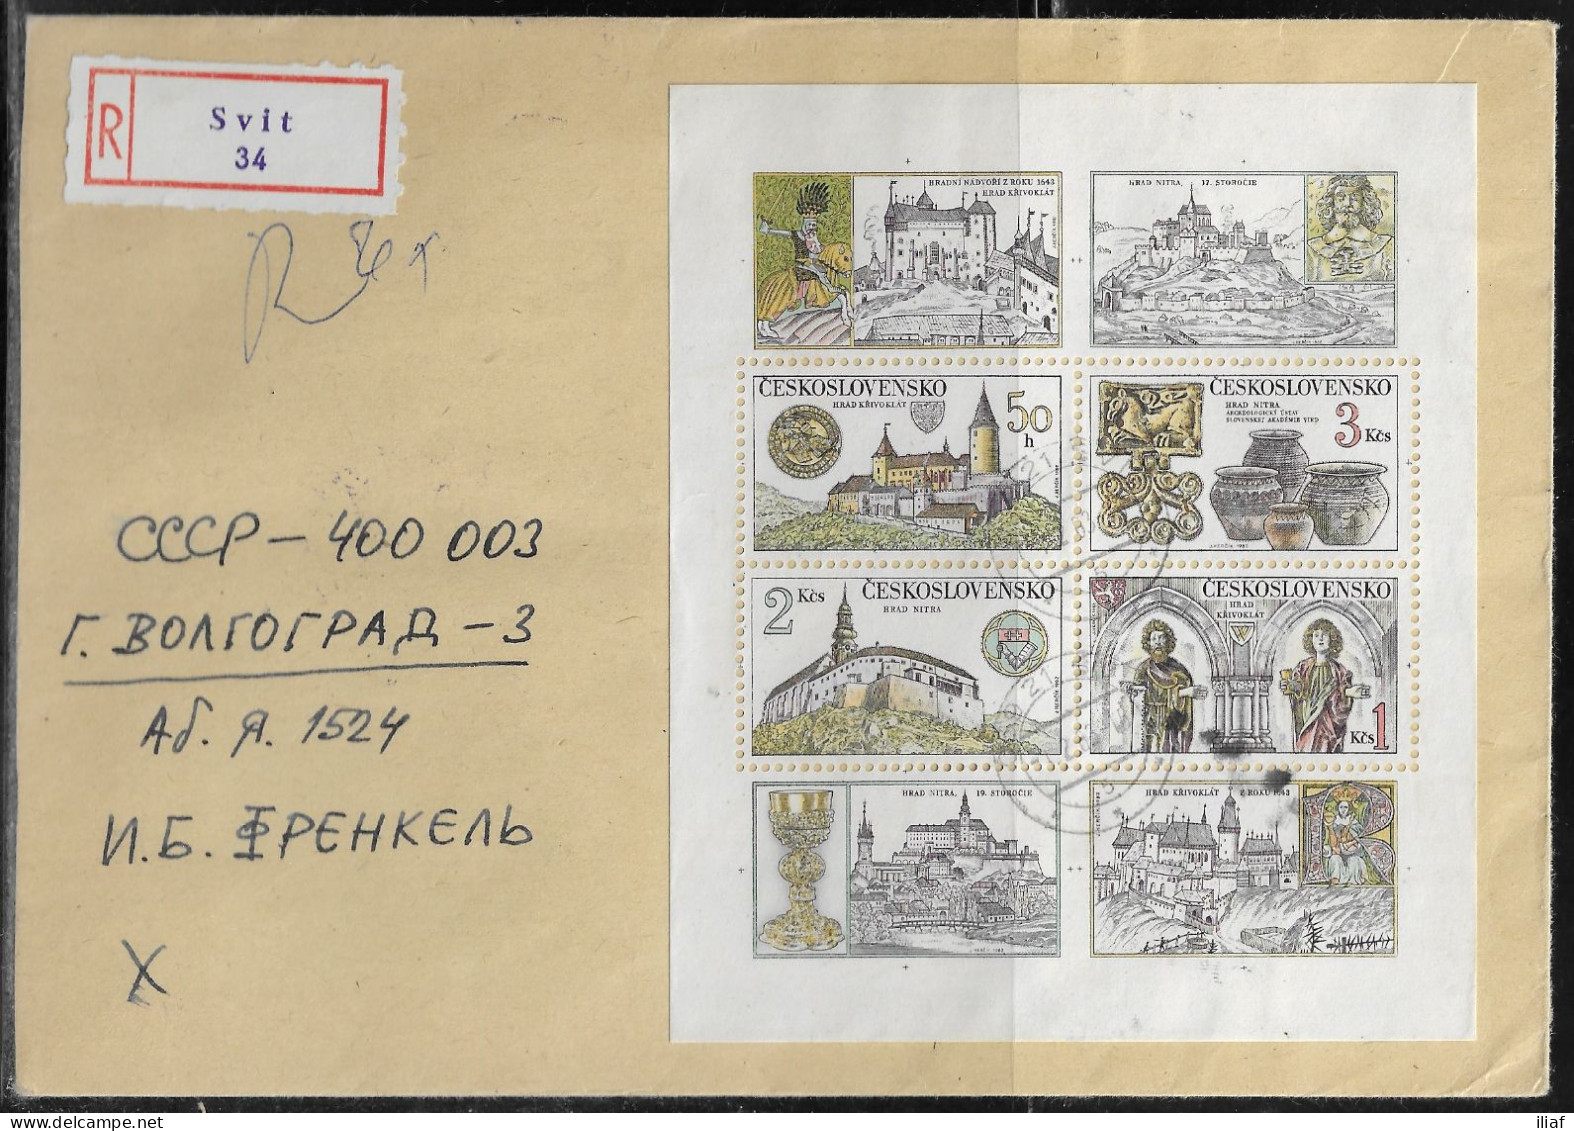 Czechoslovakia. Souvenir Sheet Sc. 2418a On Registered Letter, Sent 1.02.83 From Svit For USSR Volgograd. - Covers & Documents